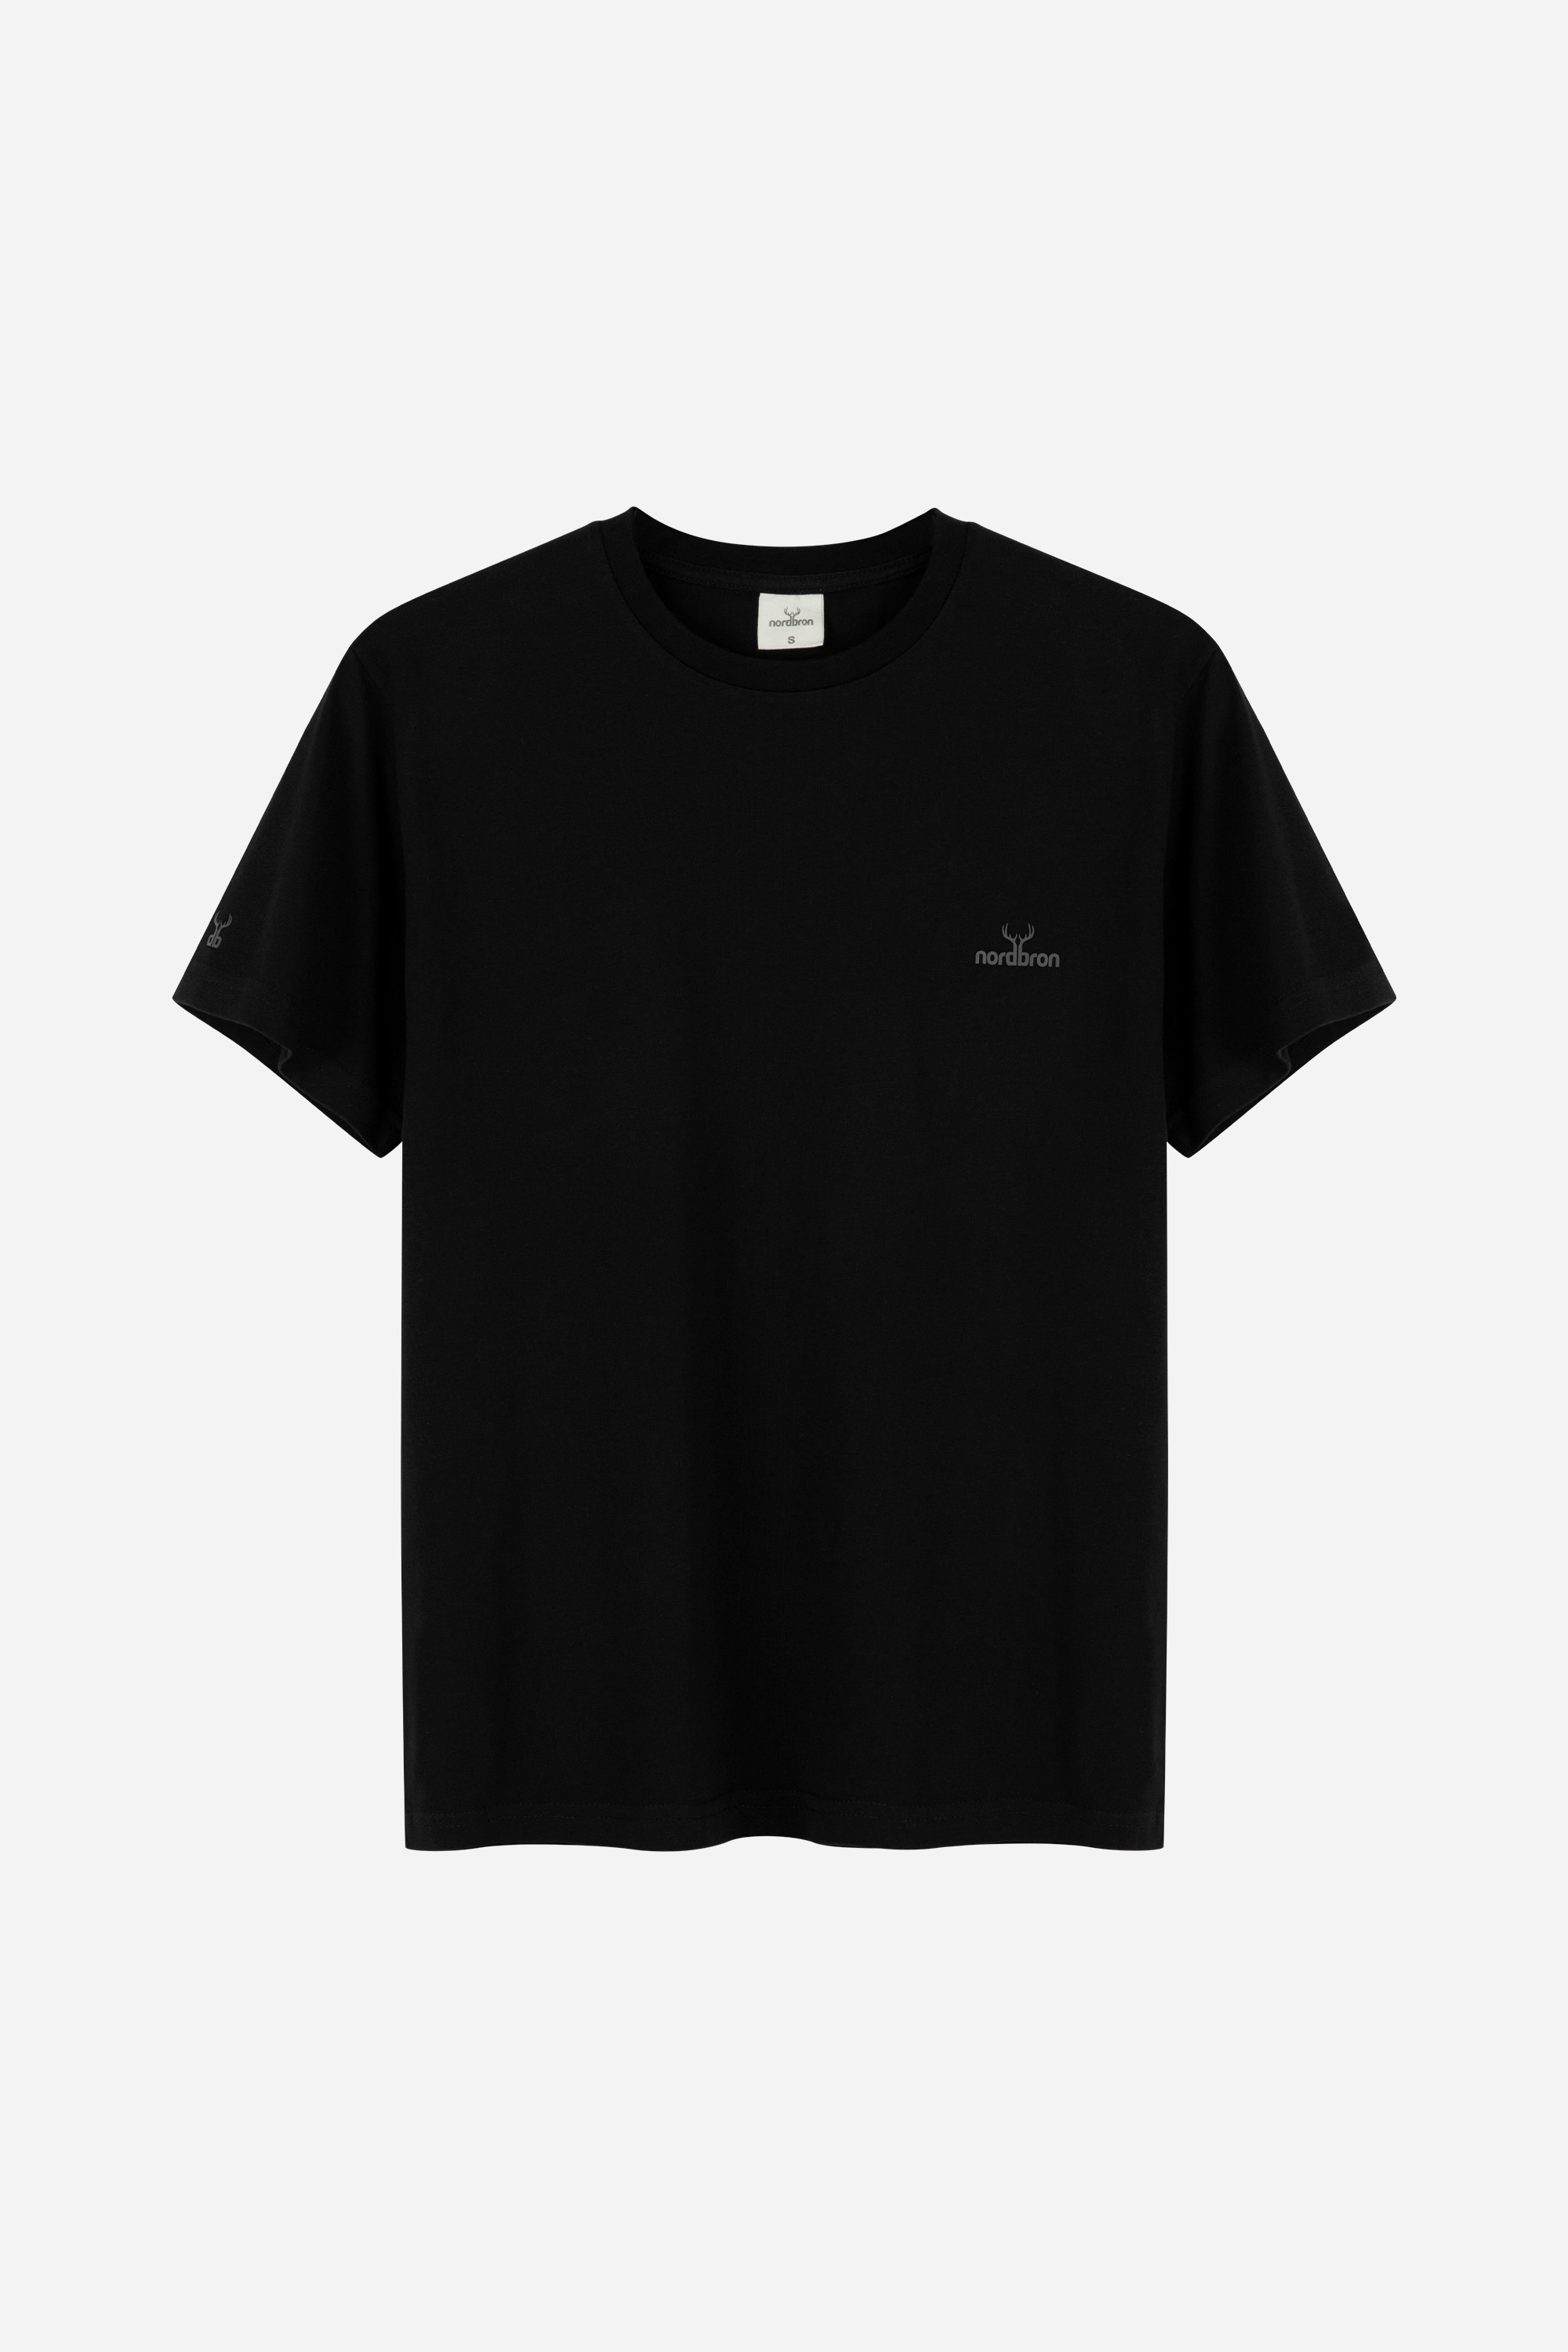 Dussel Nordbron T-shirt - Black